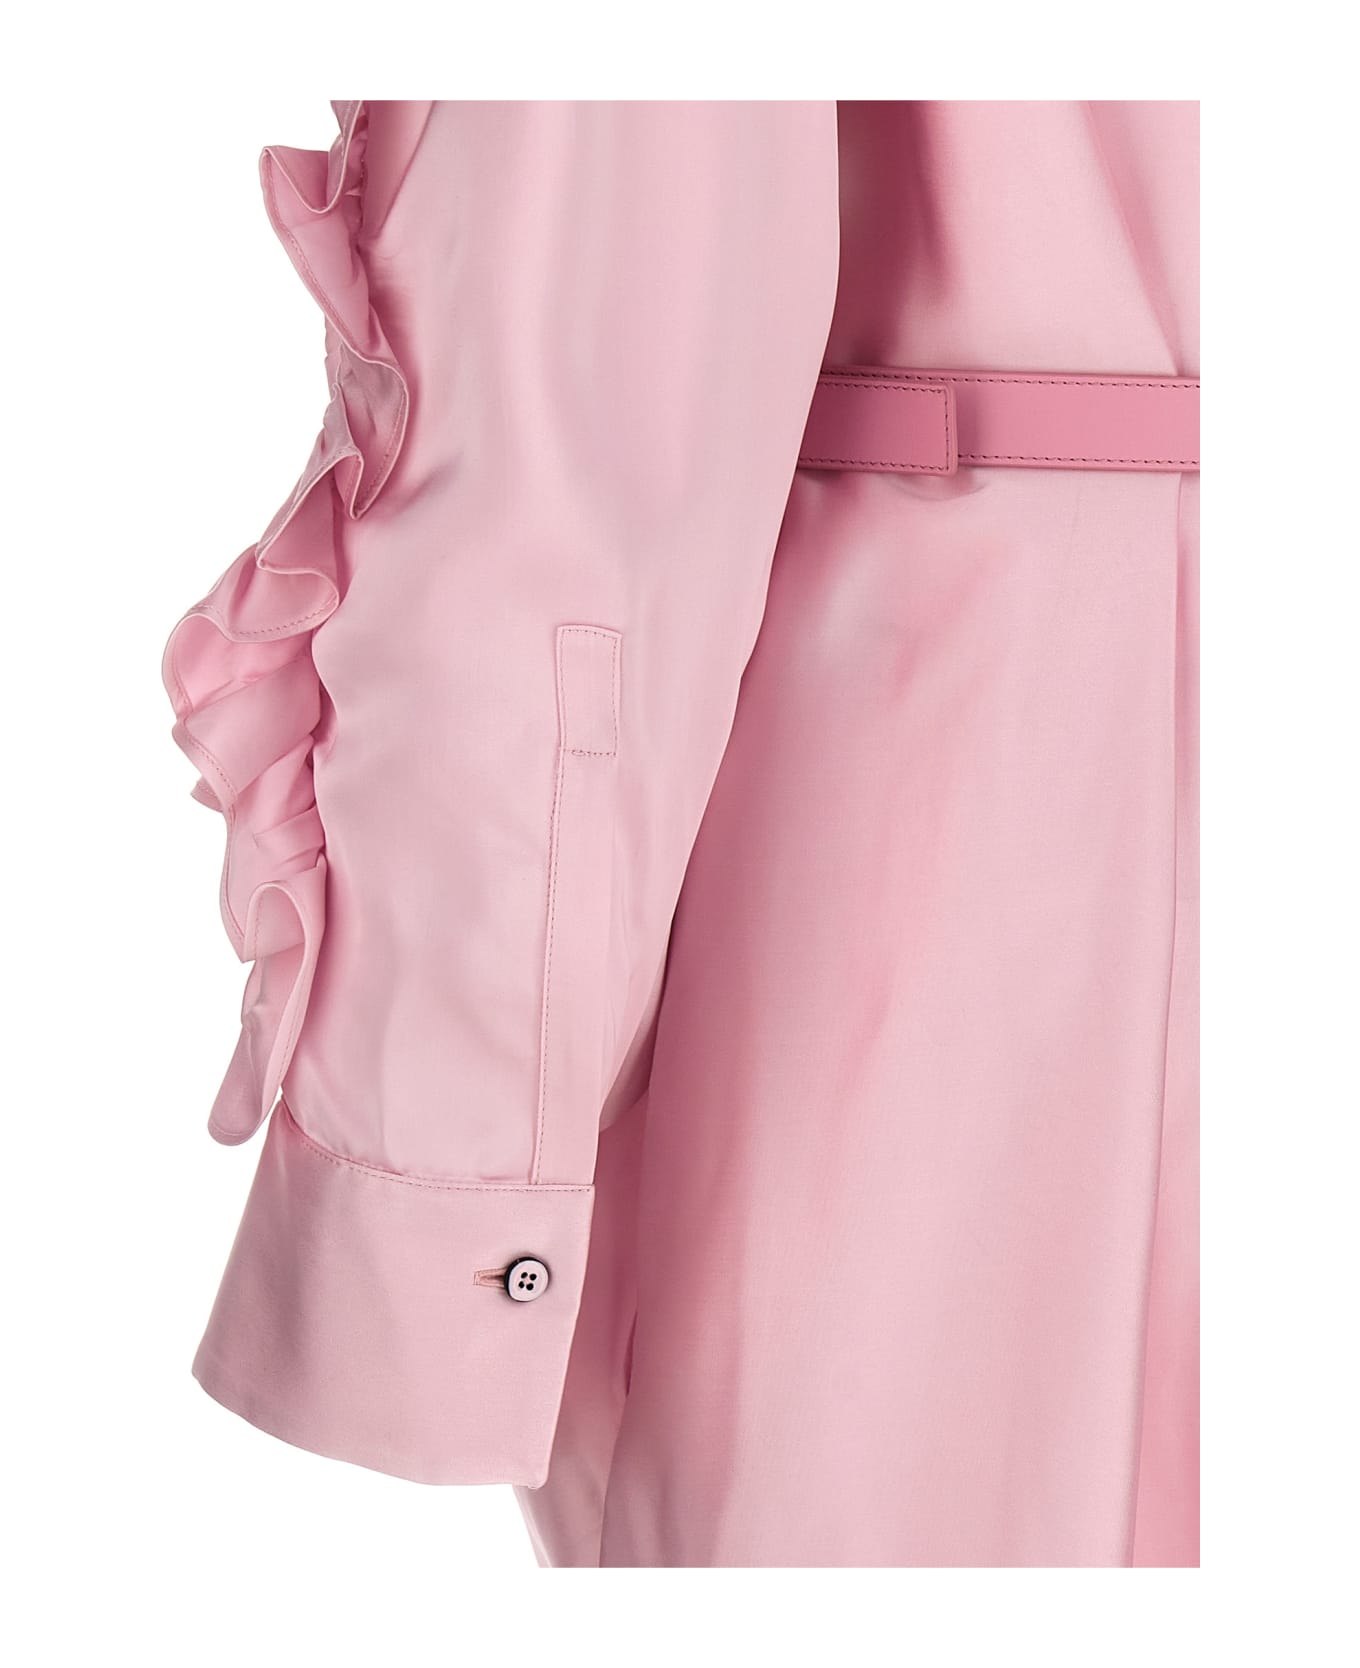 Jil Sander Pink Viscose Dress - Pink